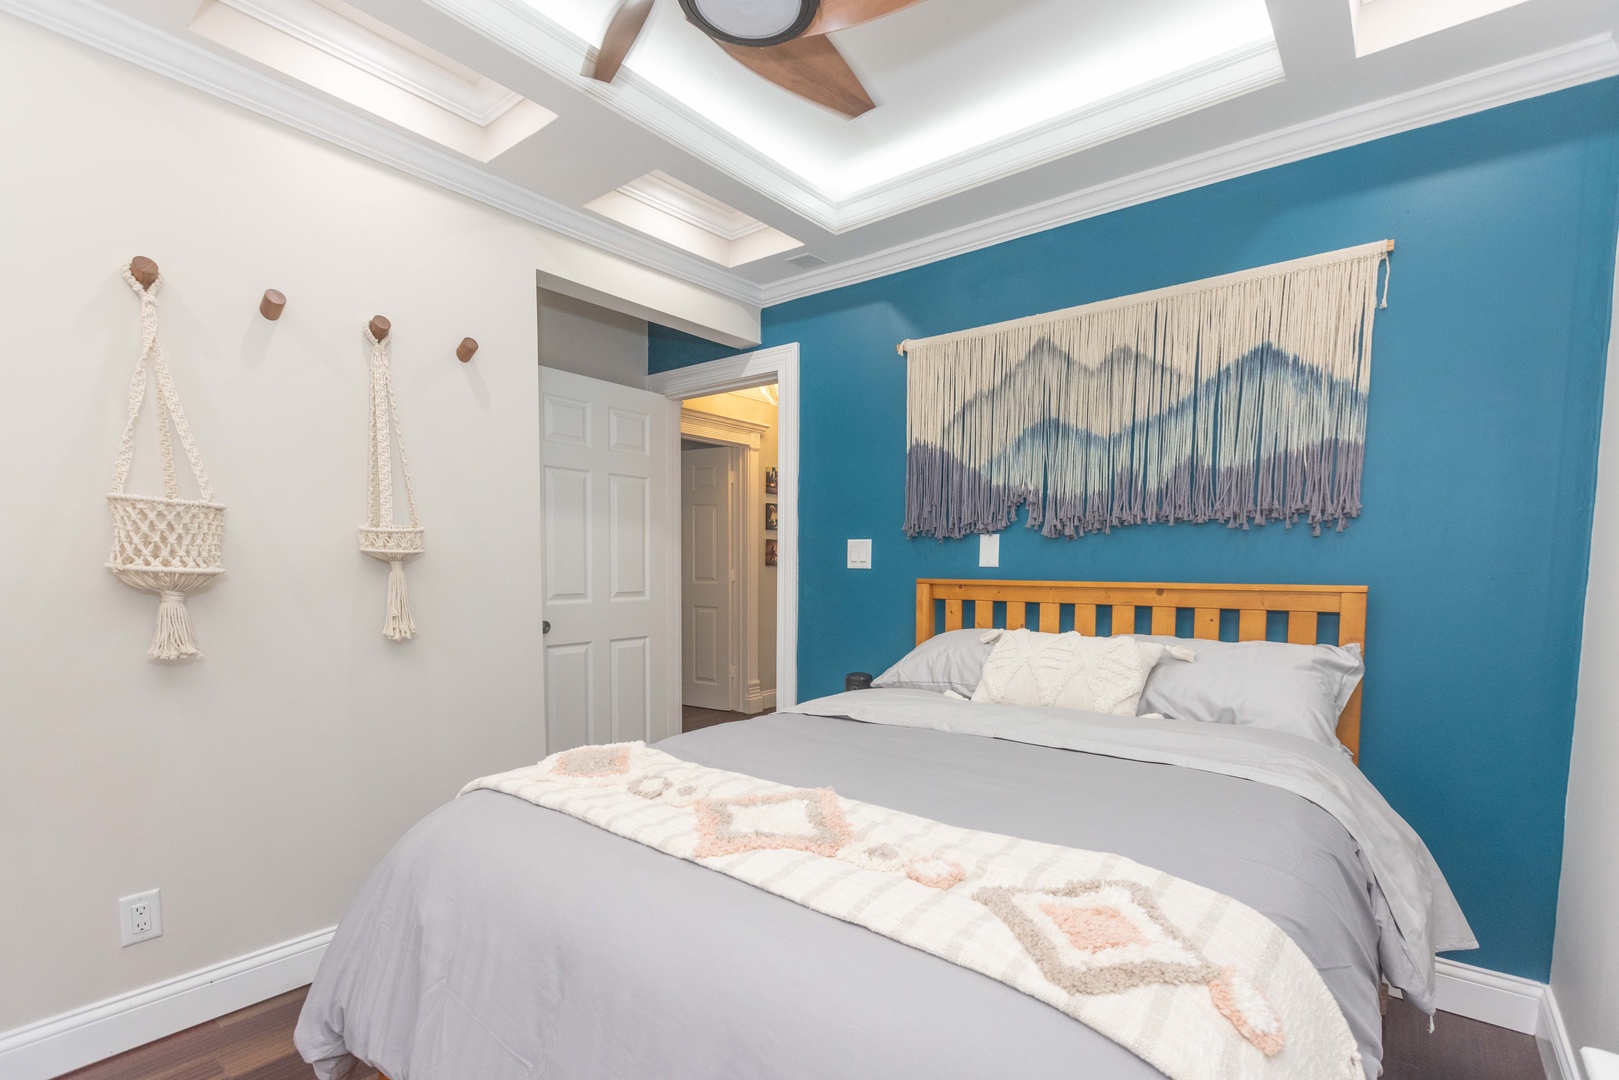 This 2nd floor queen bedroom includes a Smart TV & ceiling fan